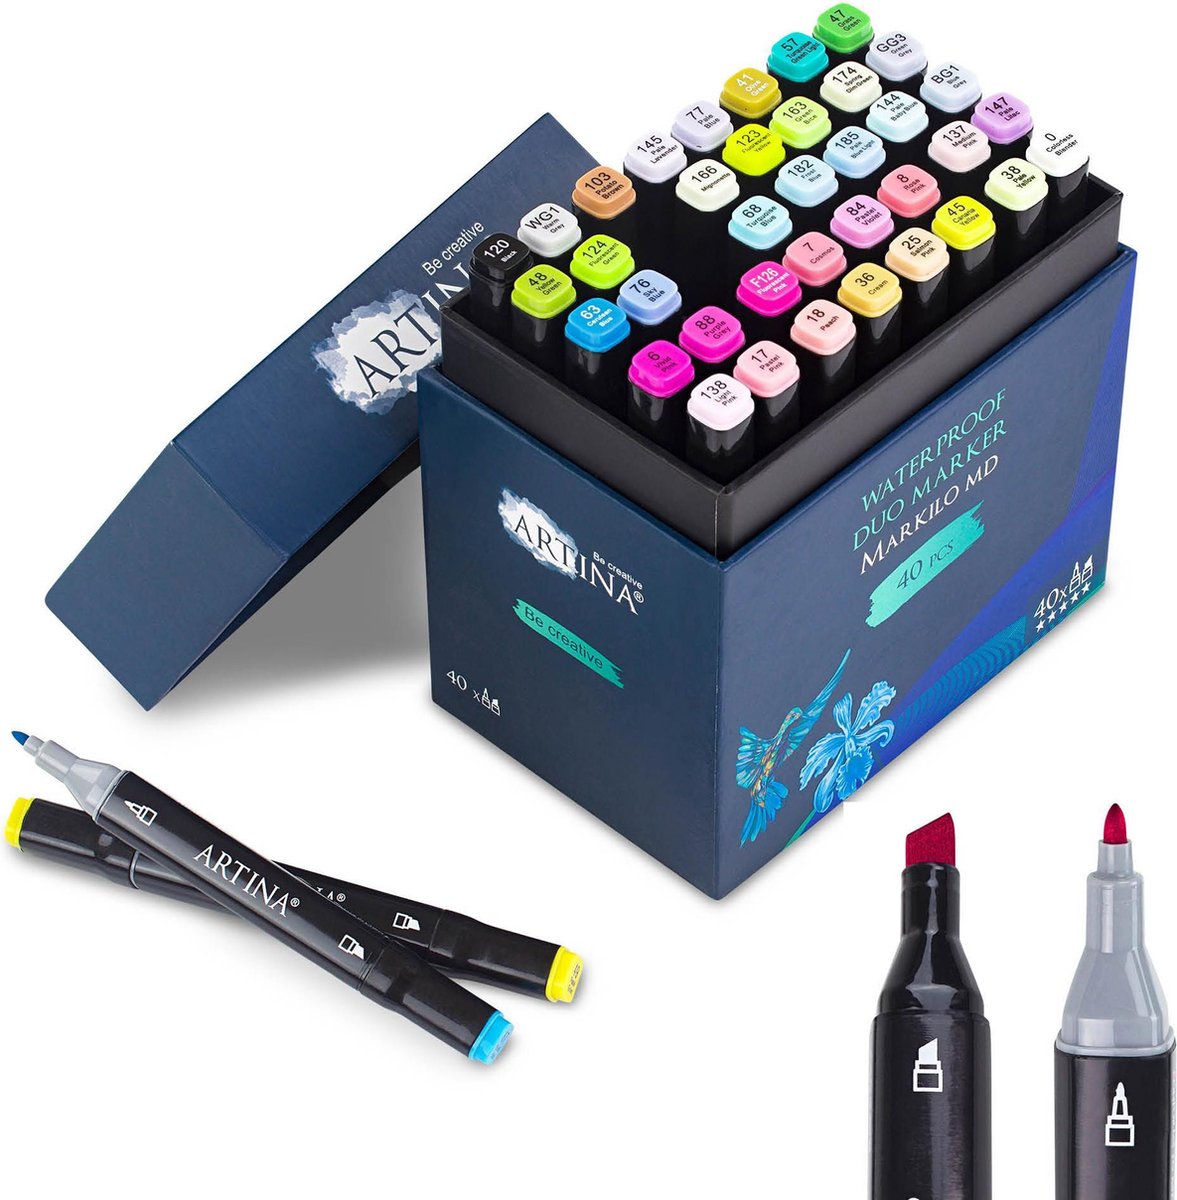 Artina Markilo MD Set van 40 Viltstiften dubbele punt – Twinmarkers – Stiften Markers voor Manga Graffiti Fashion - mini 3mm en medium 6mm